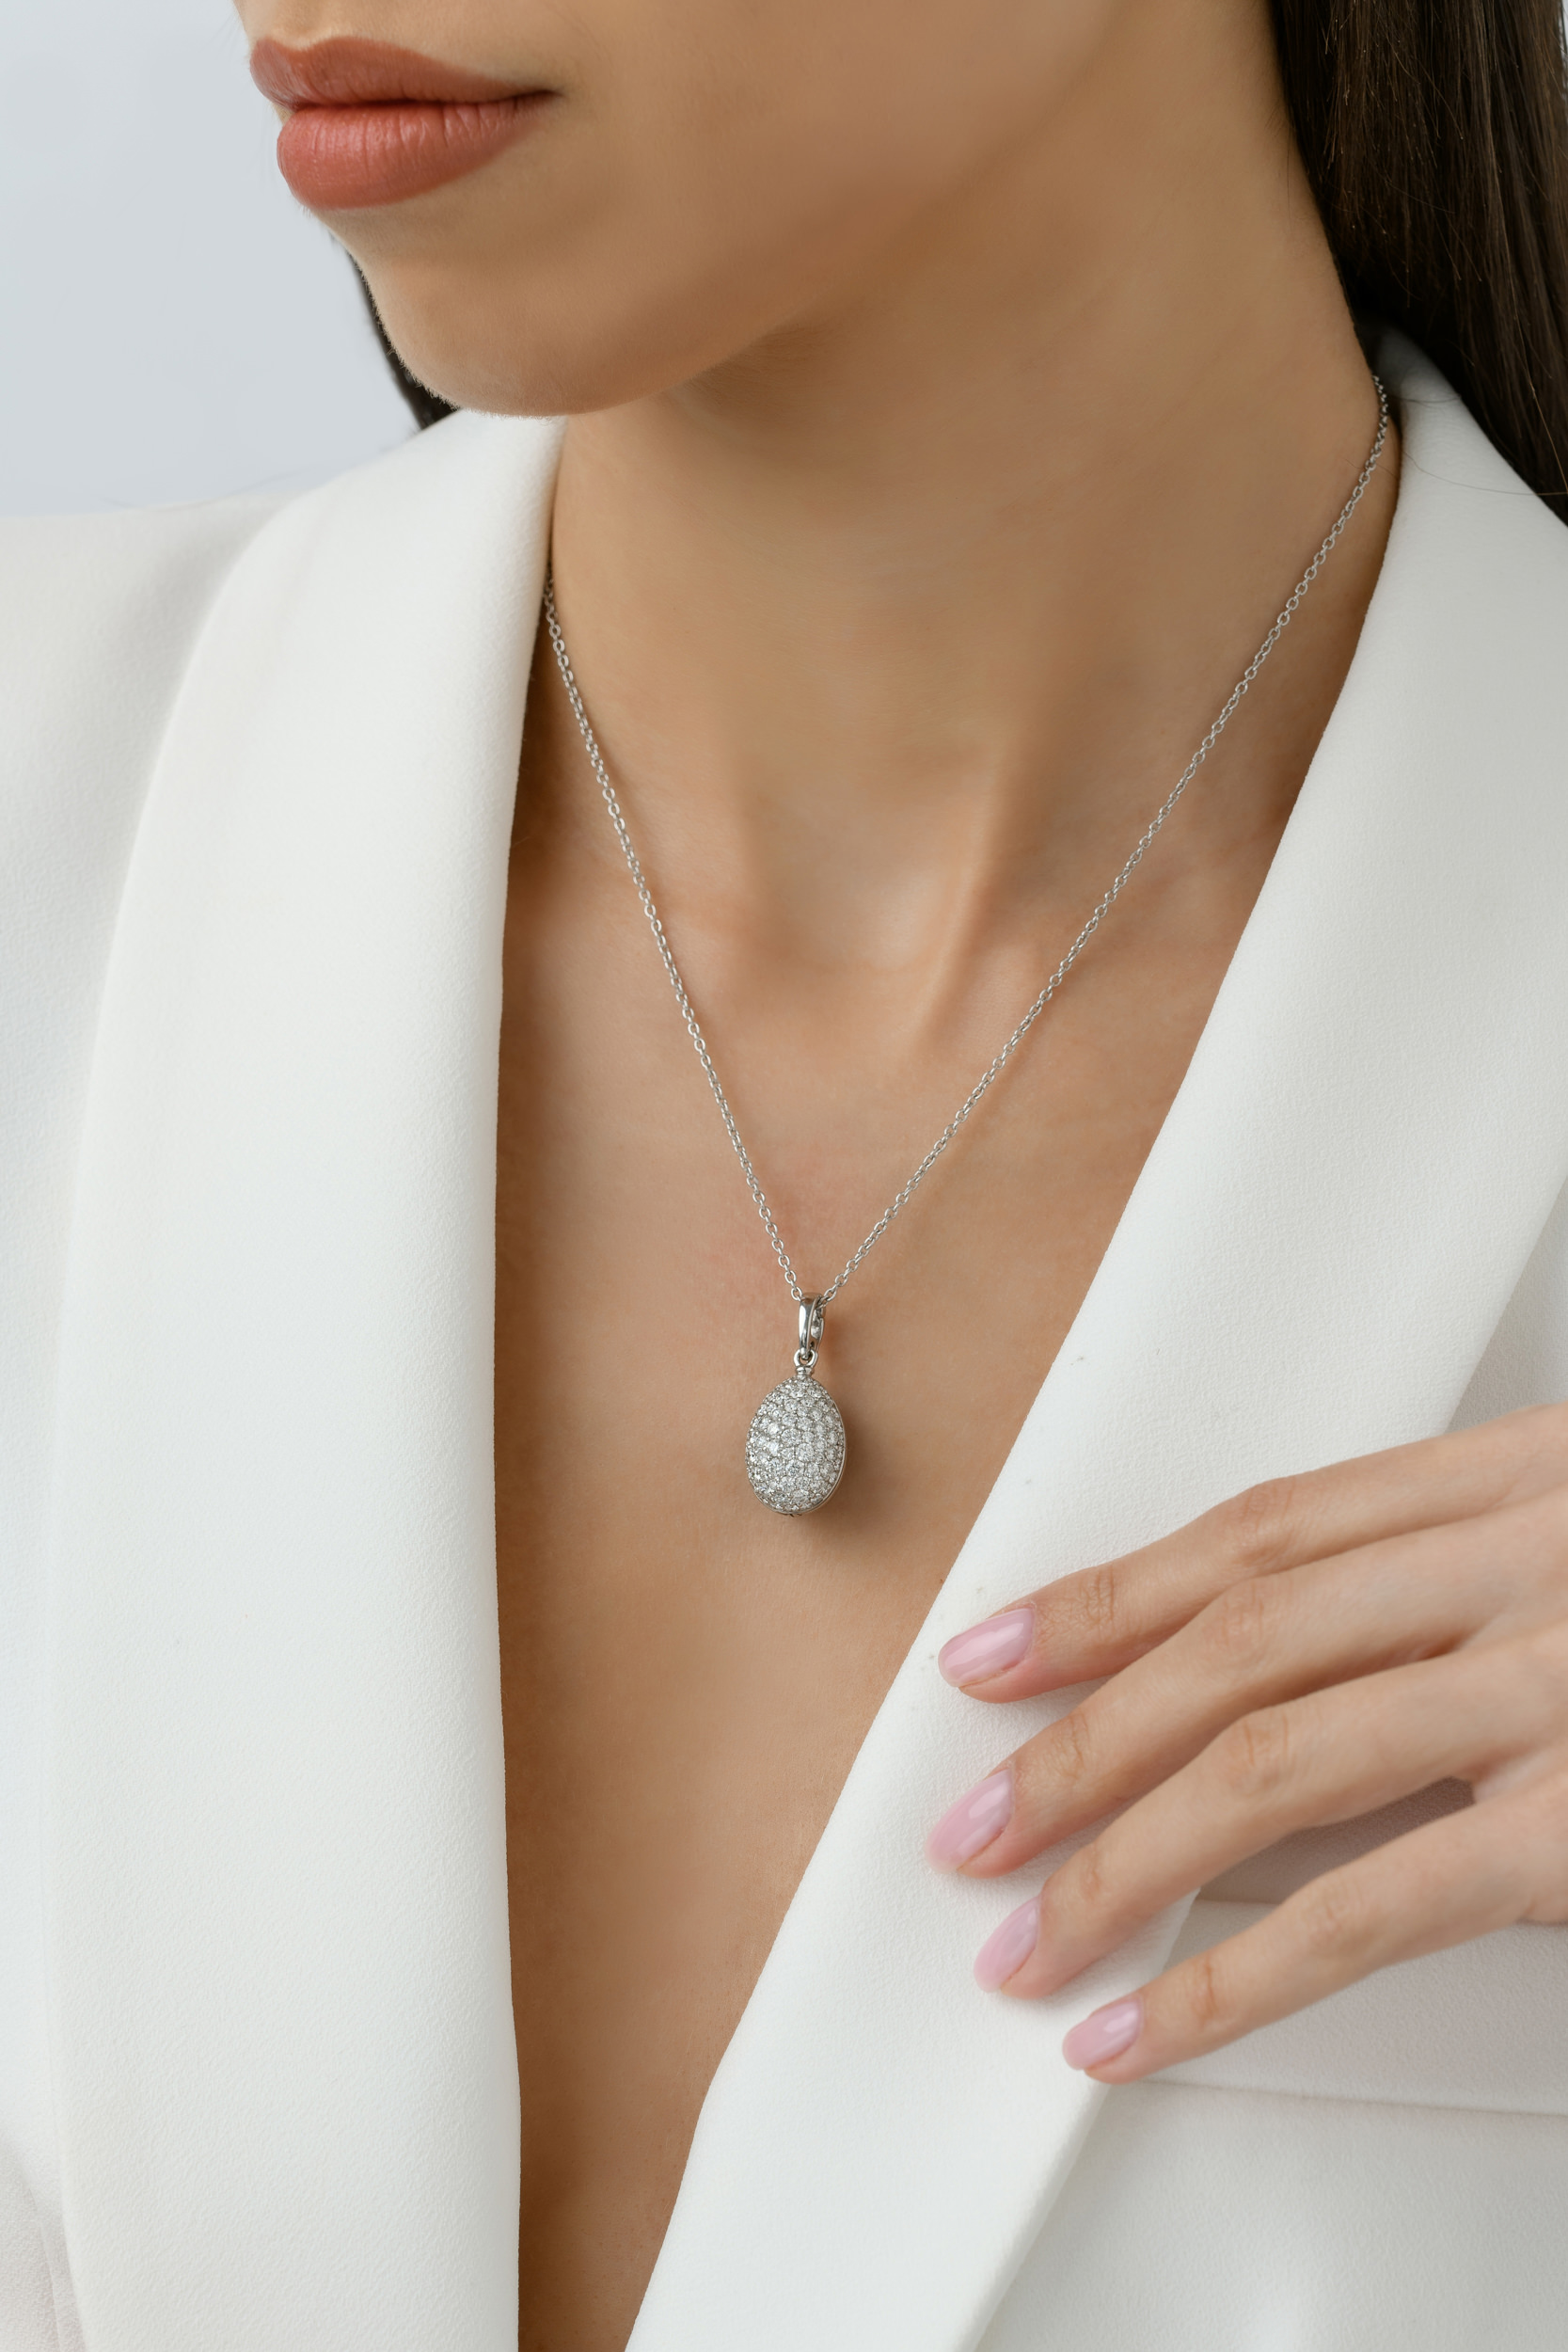 FABERGE Diamond Royal Blue Egg Pendant Necklace | Kessaris